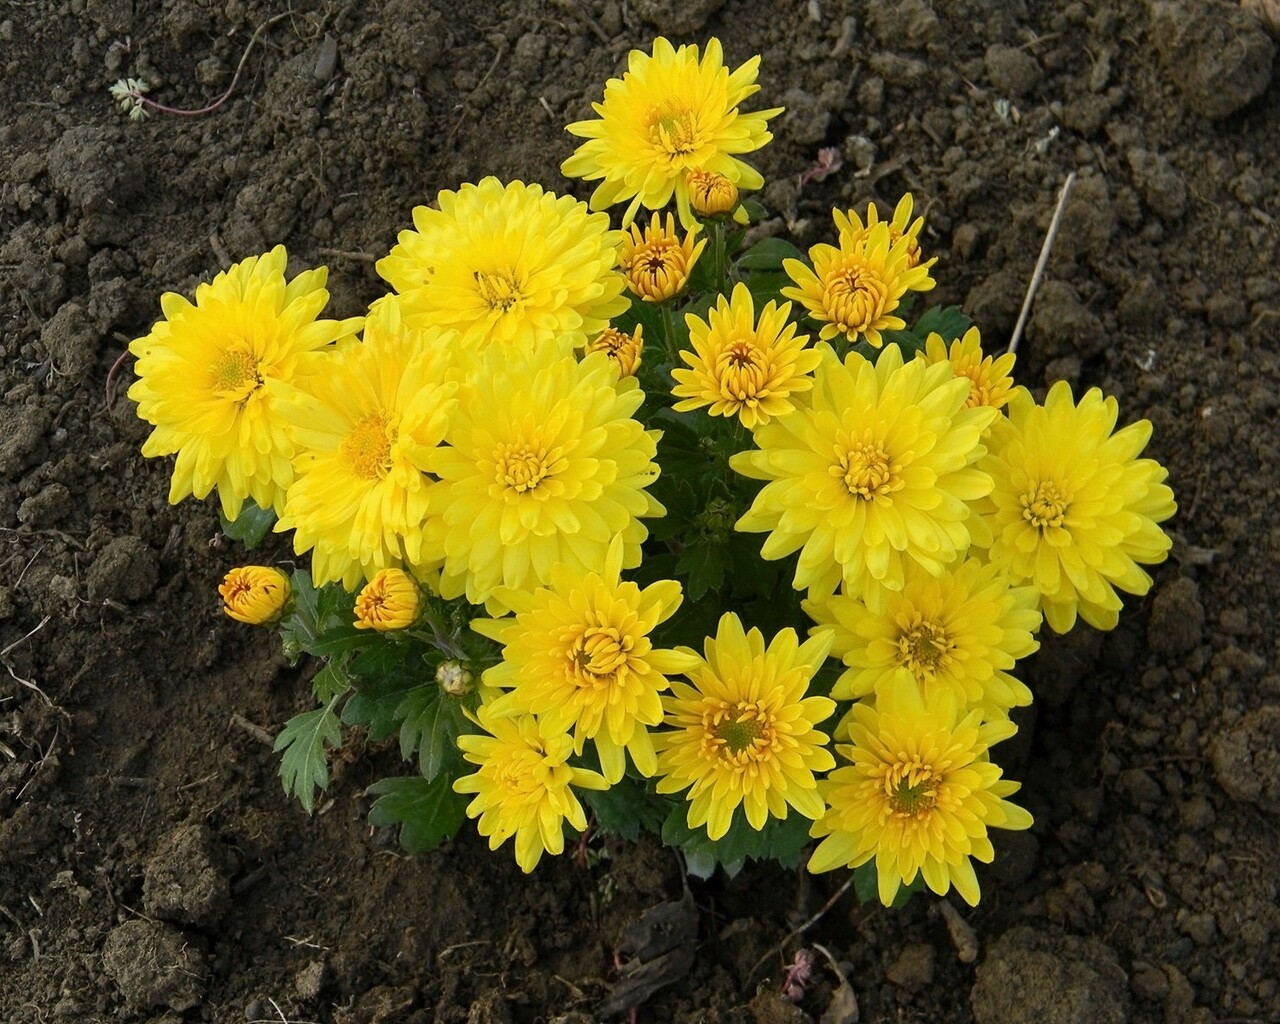 Yellow Chrysanthemums